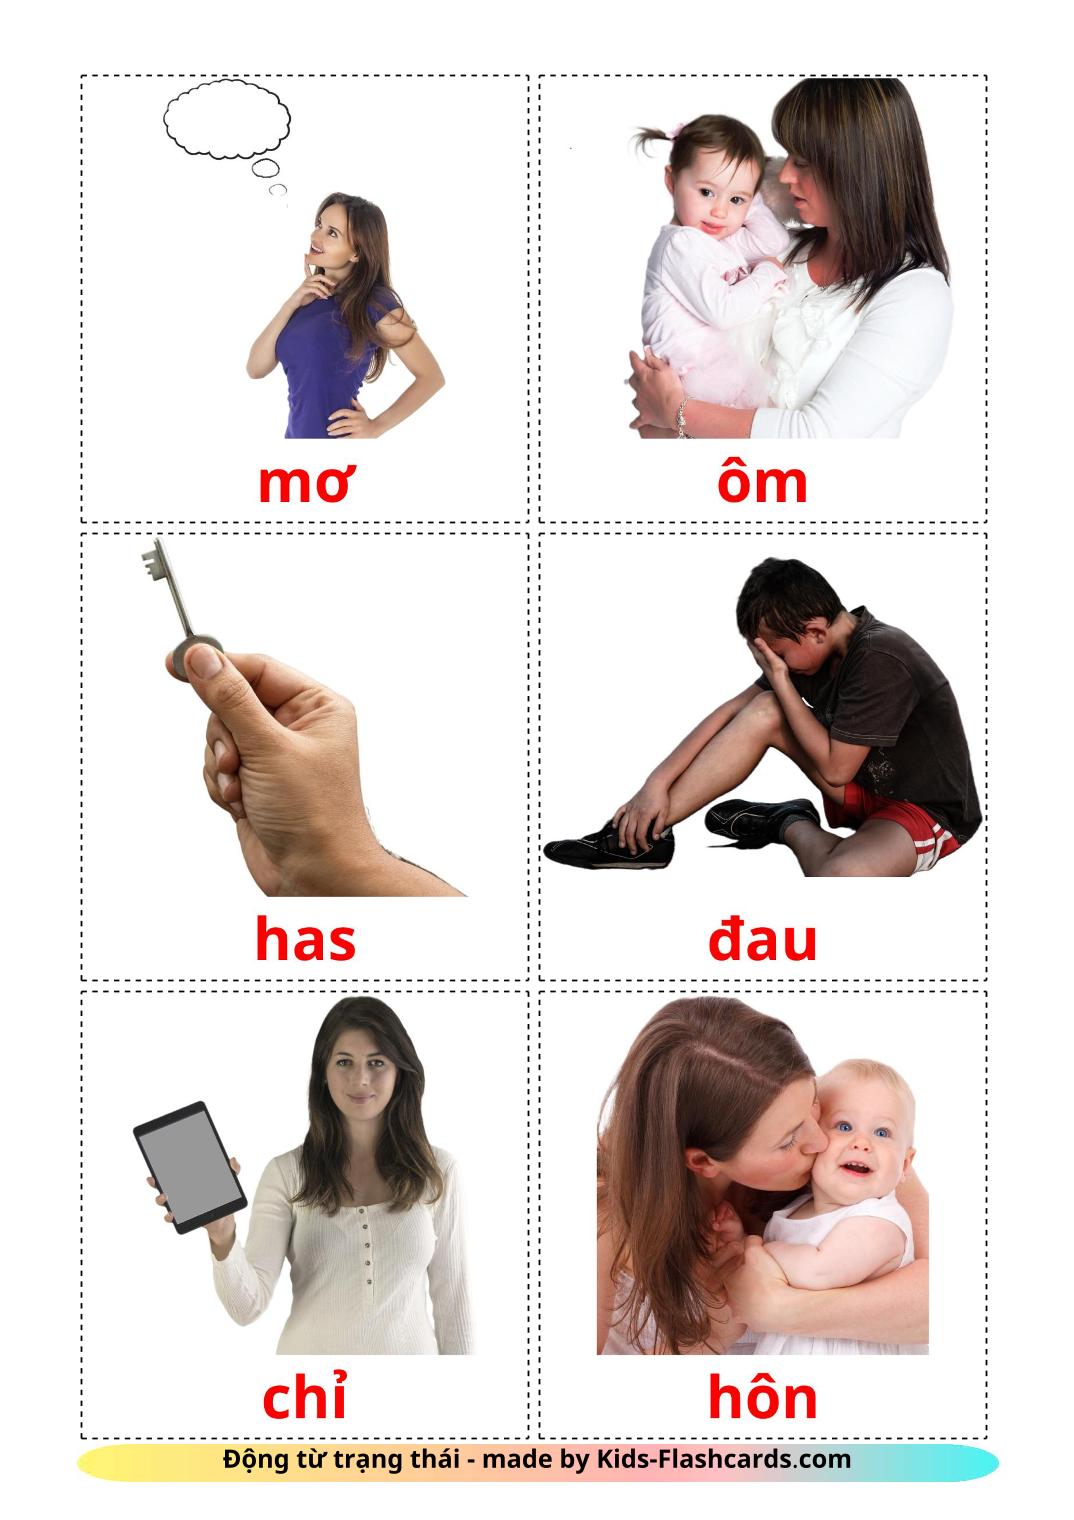 State verbs - 23 Free Printable vietnamese Flashcards 